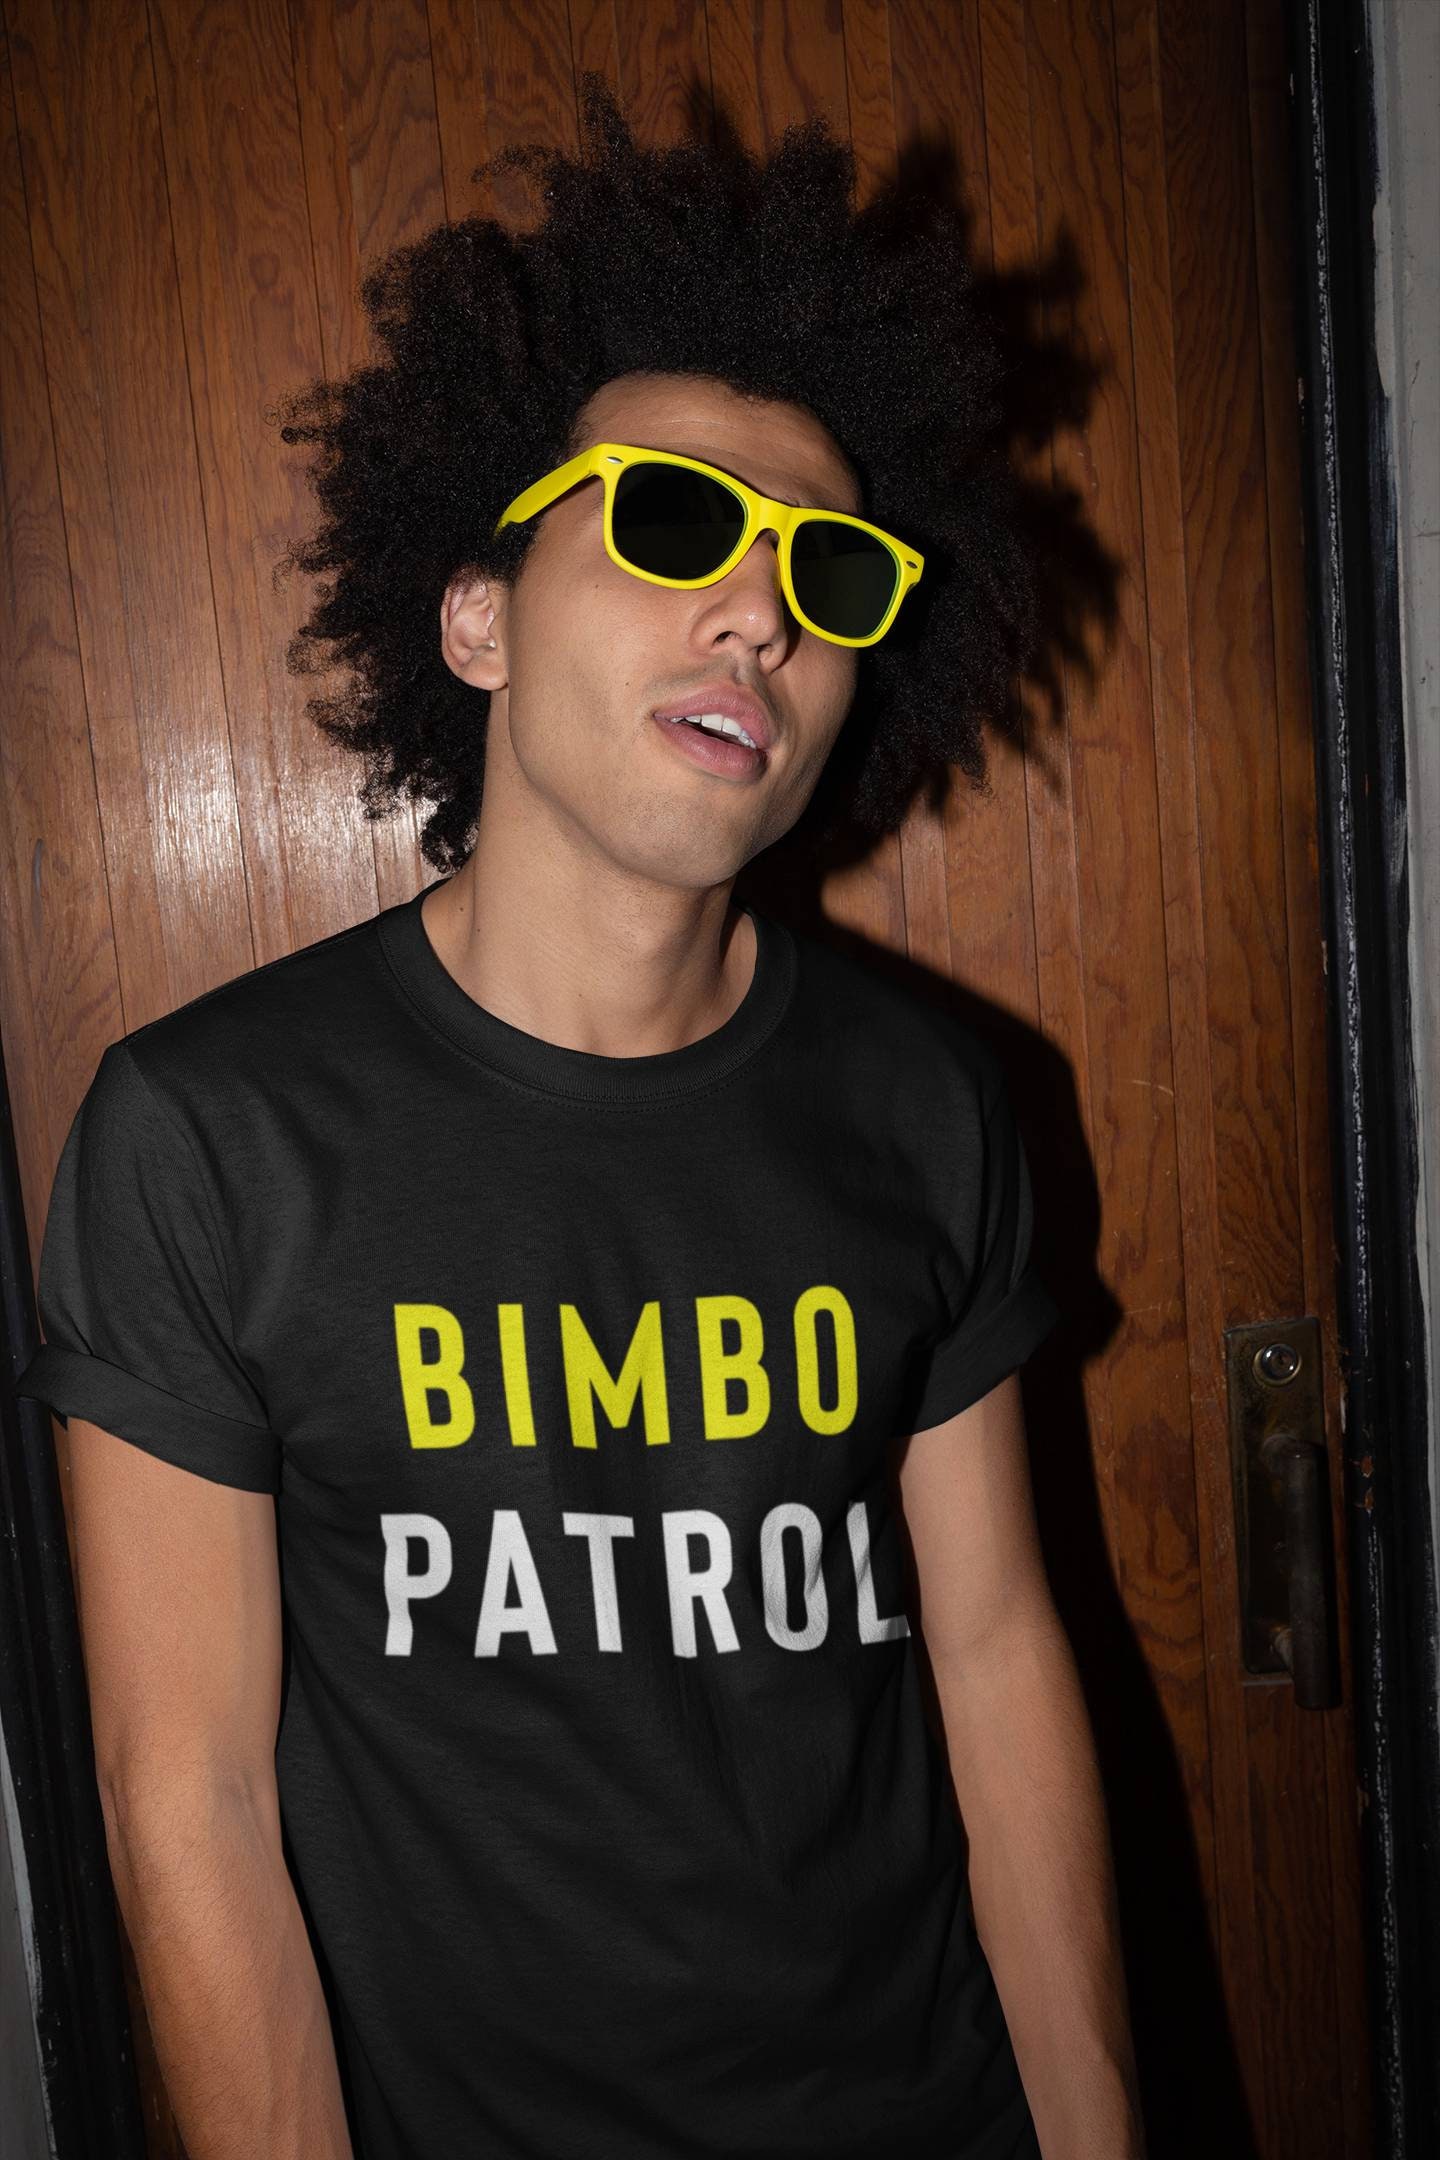 Bimbo a bordo per auto  Made in Italy – Lol T-shirt